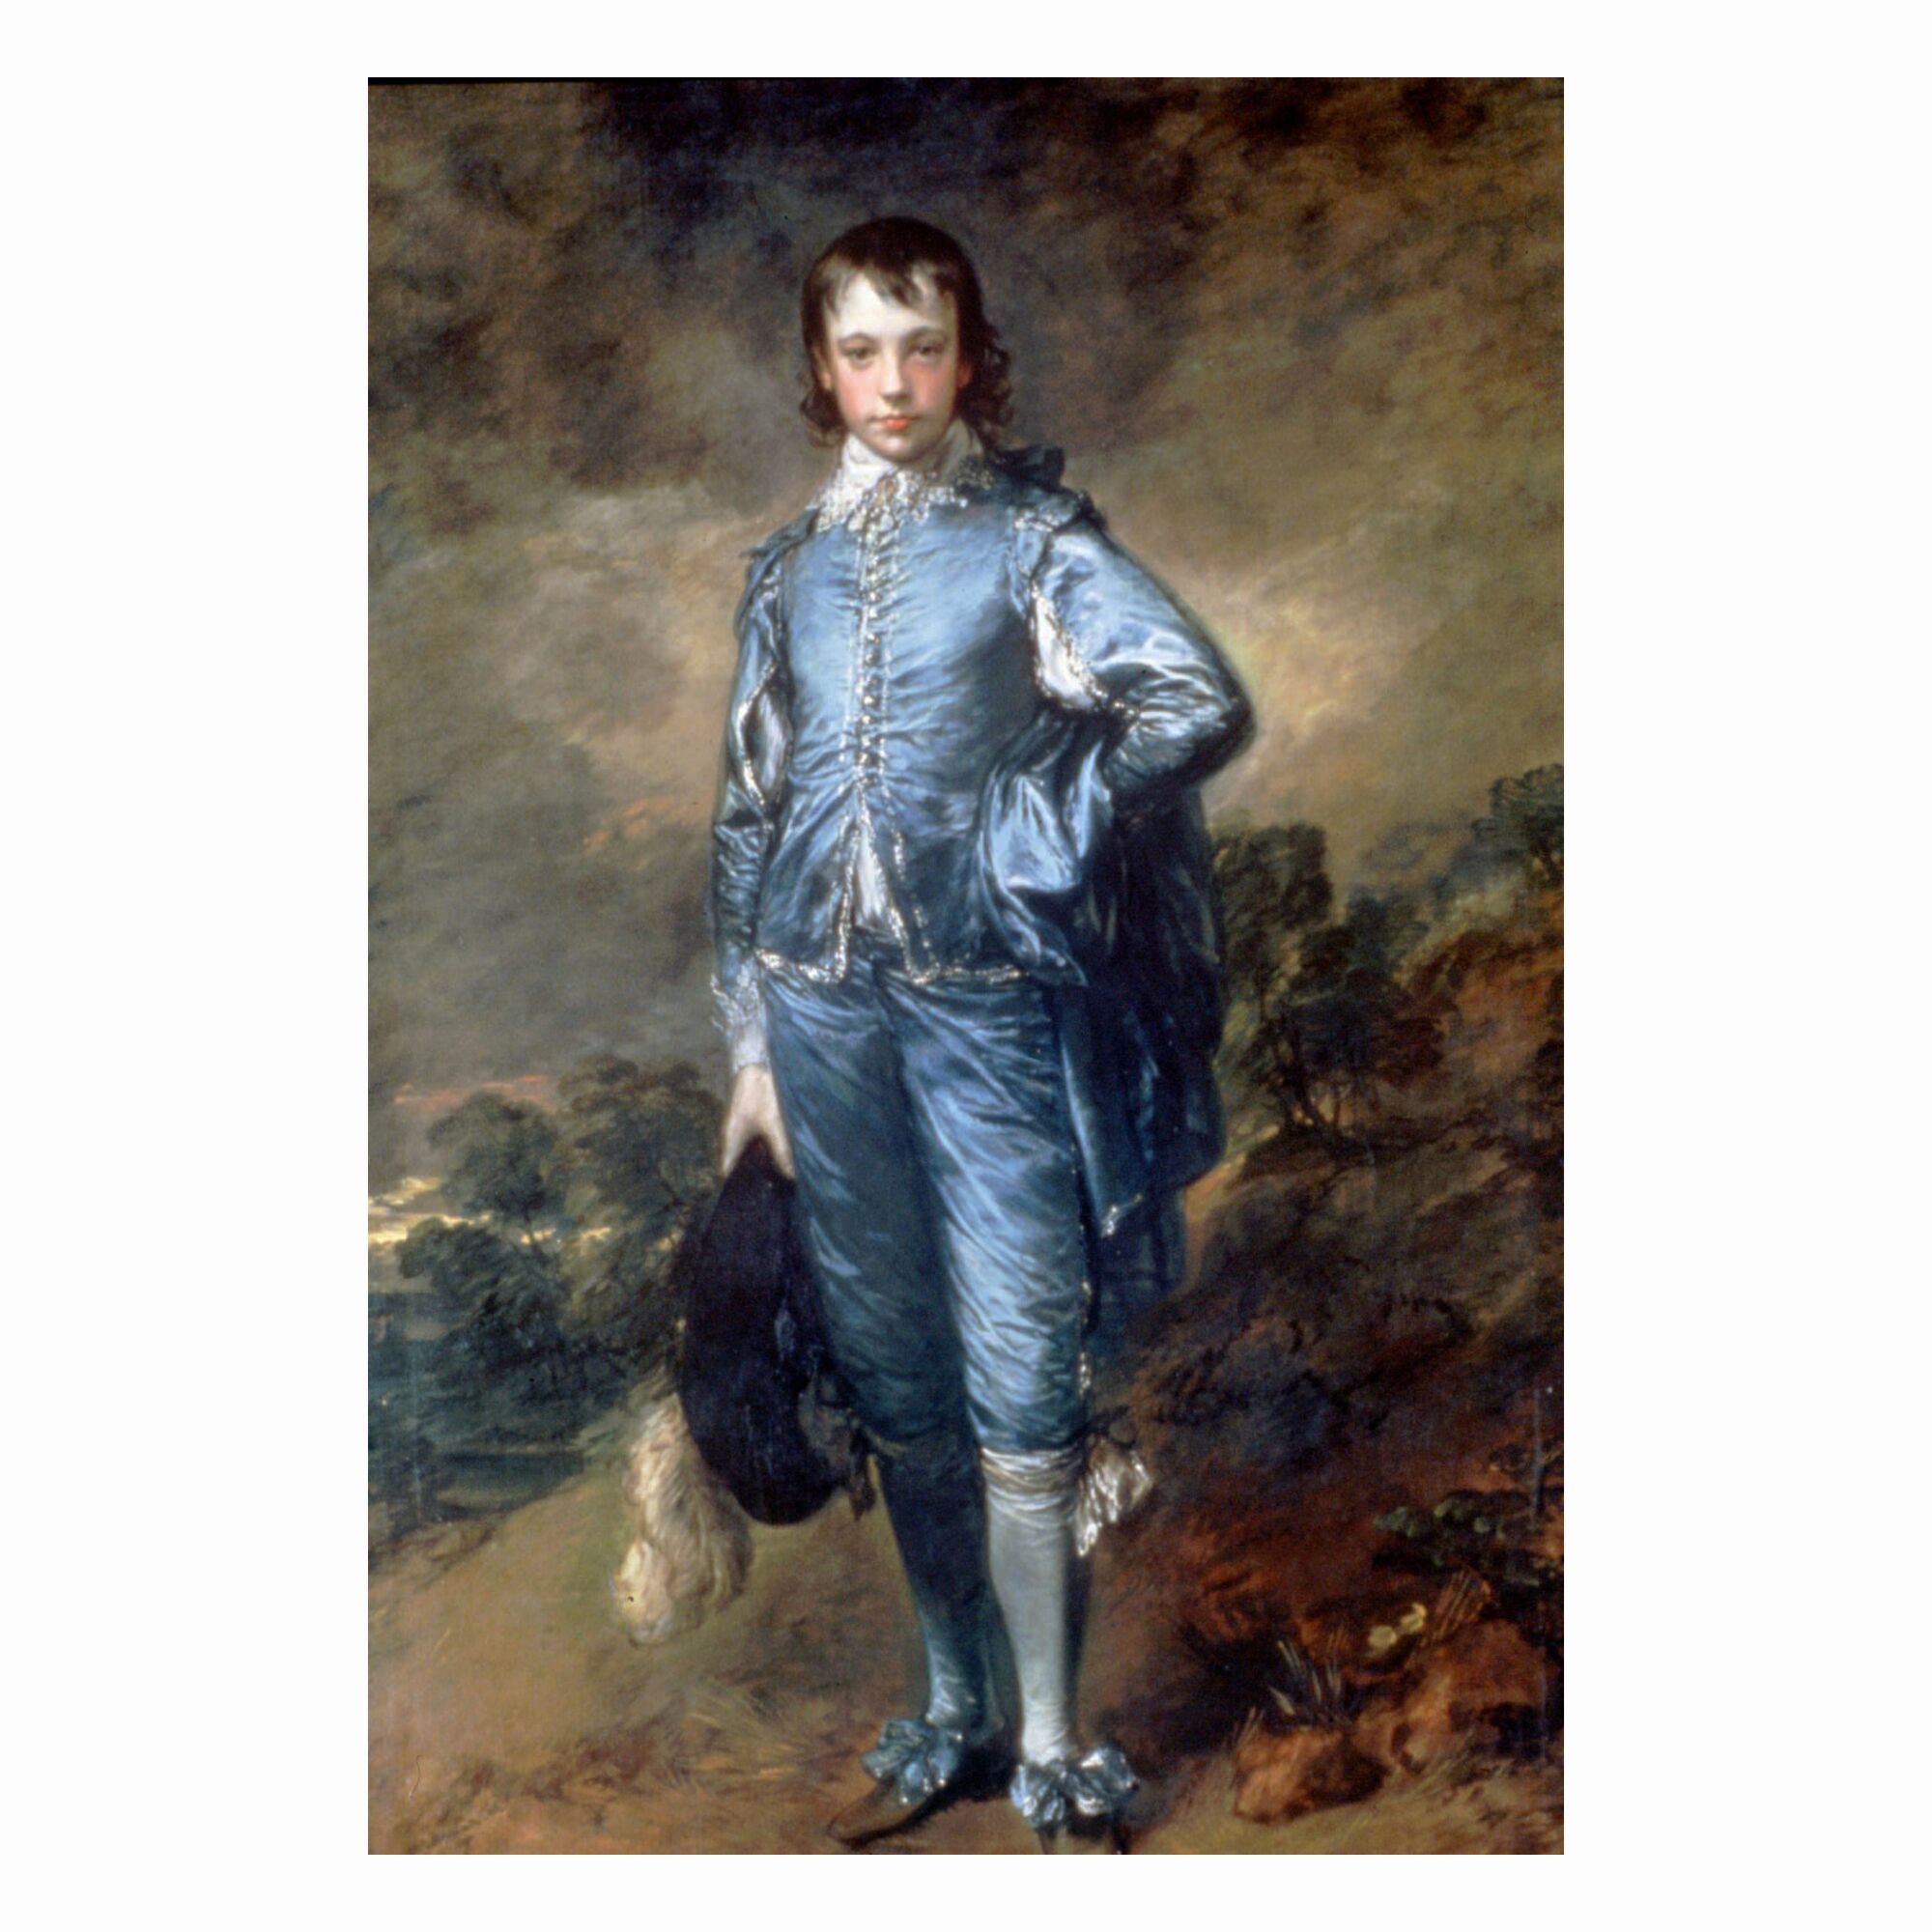 Thomas Gainsborough's 1770 painting "The Blue Boy." 